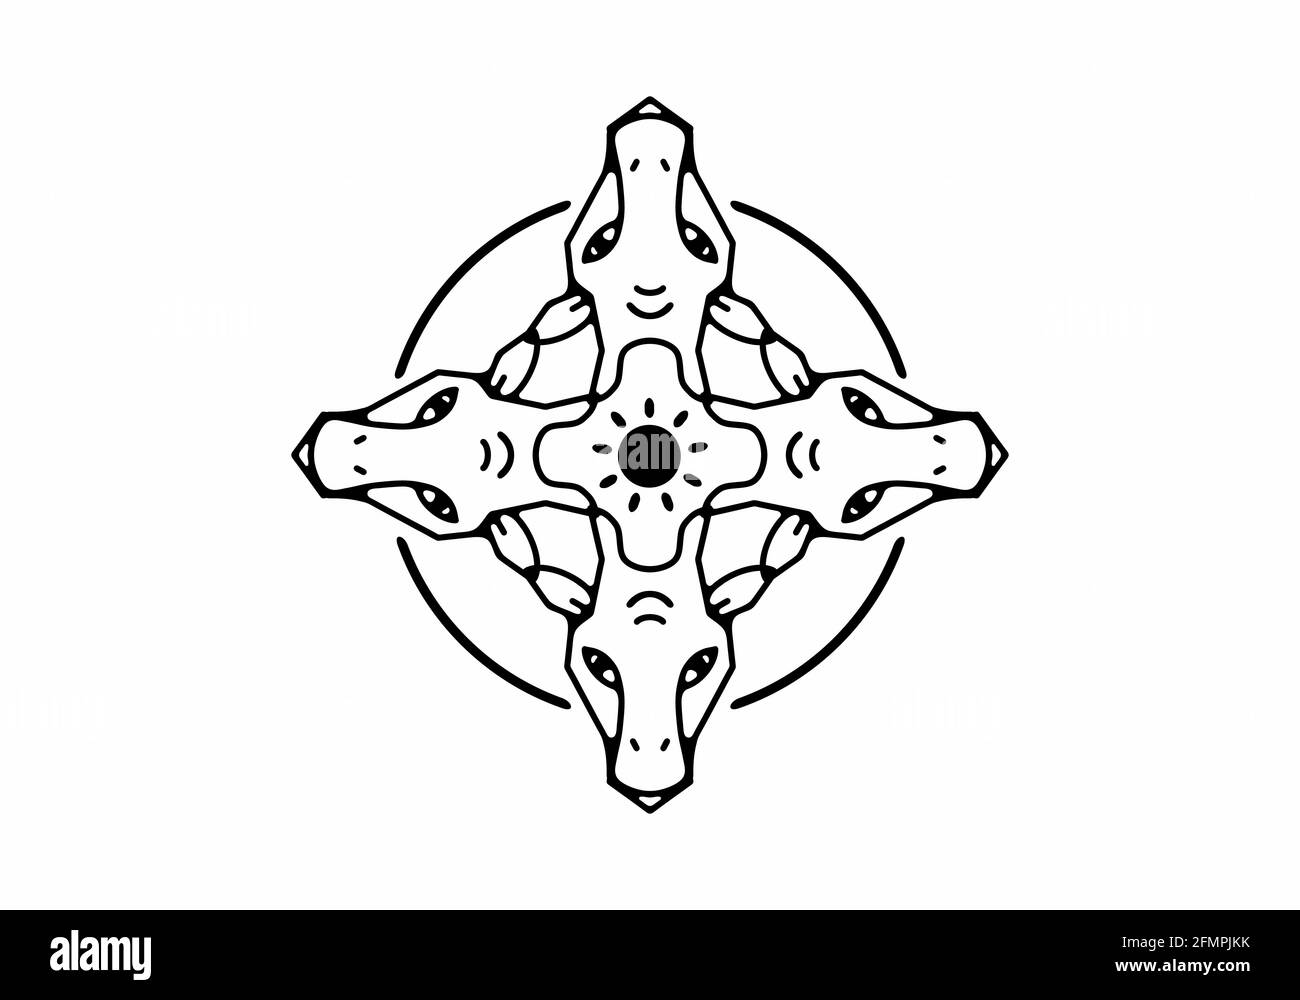 Black line art illustration of giraffe head design Stock Vector